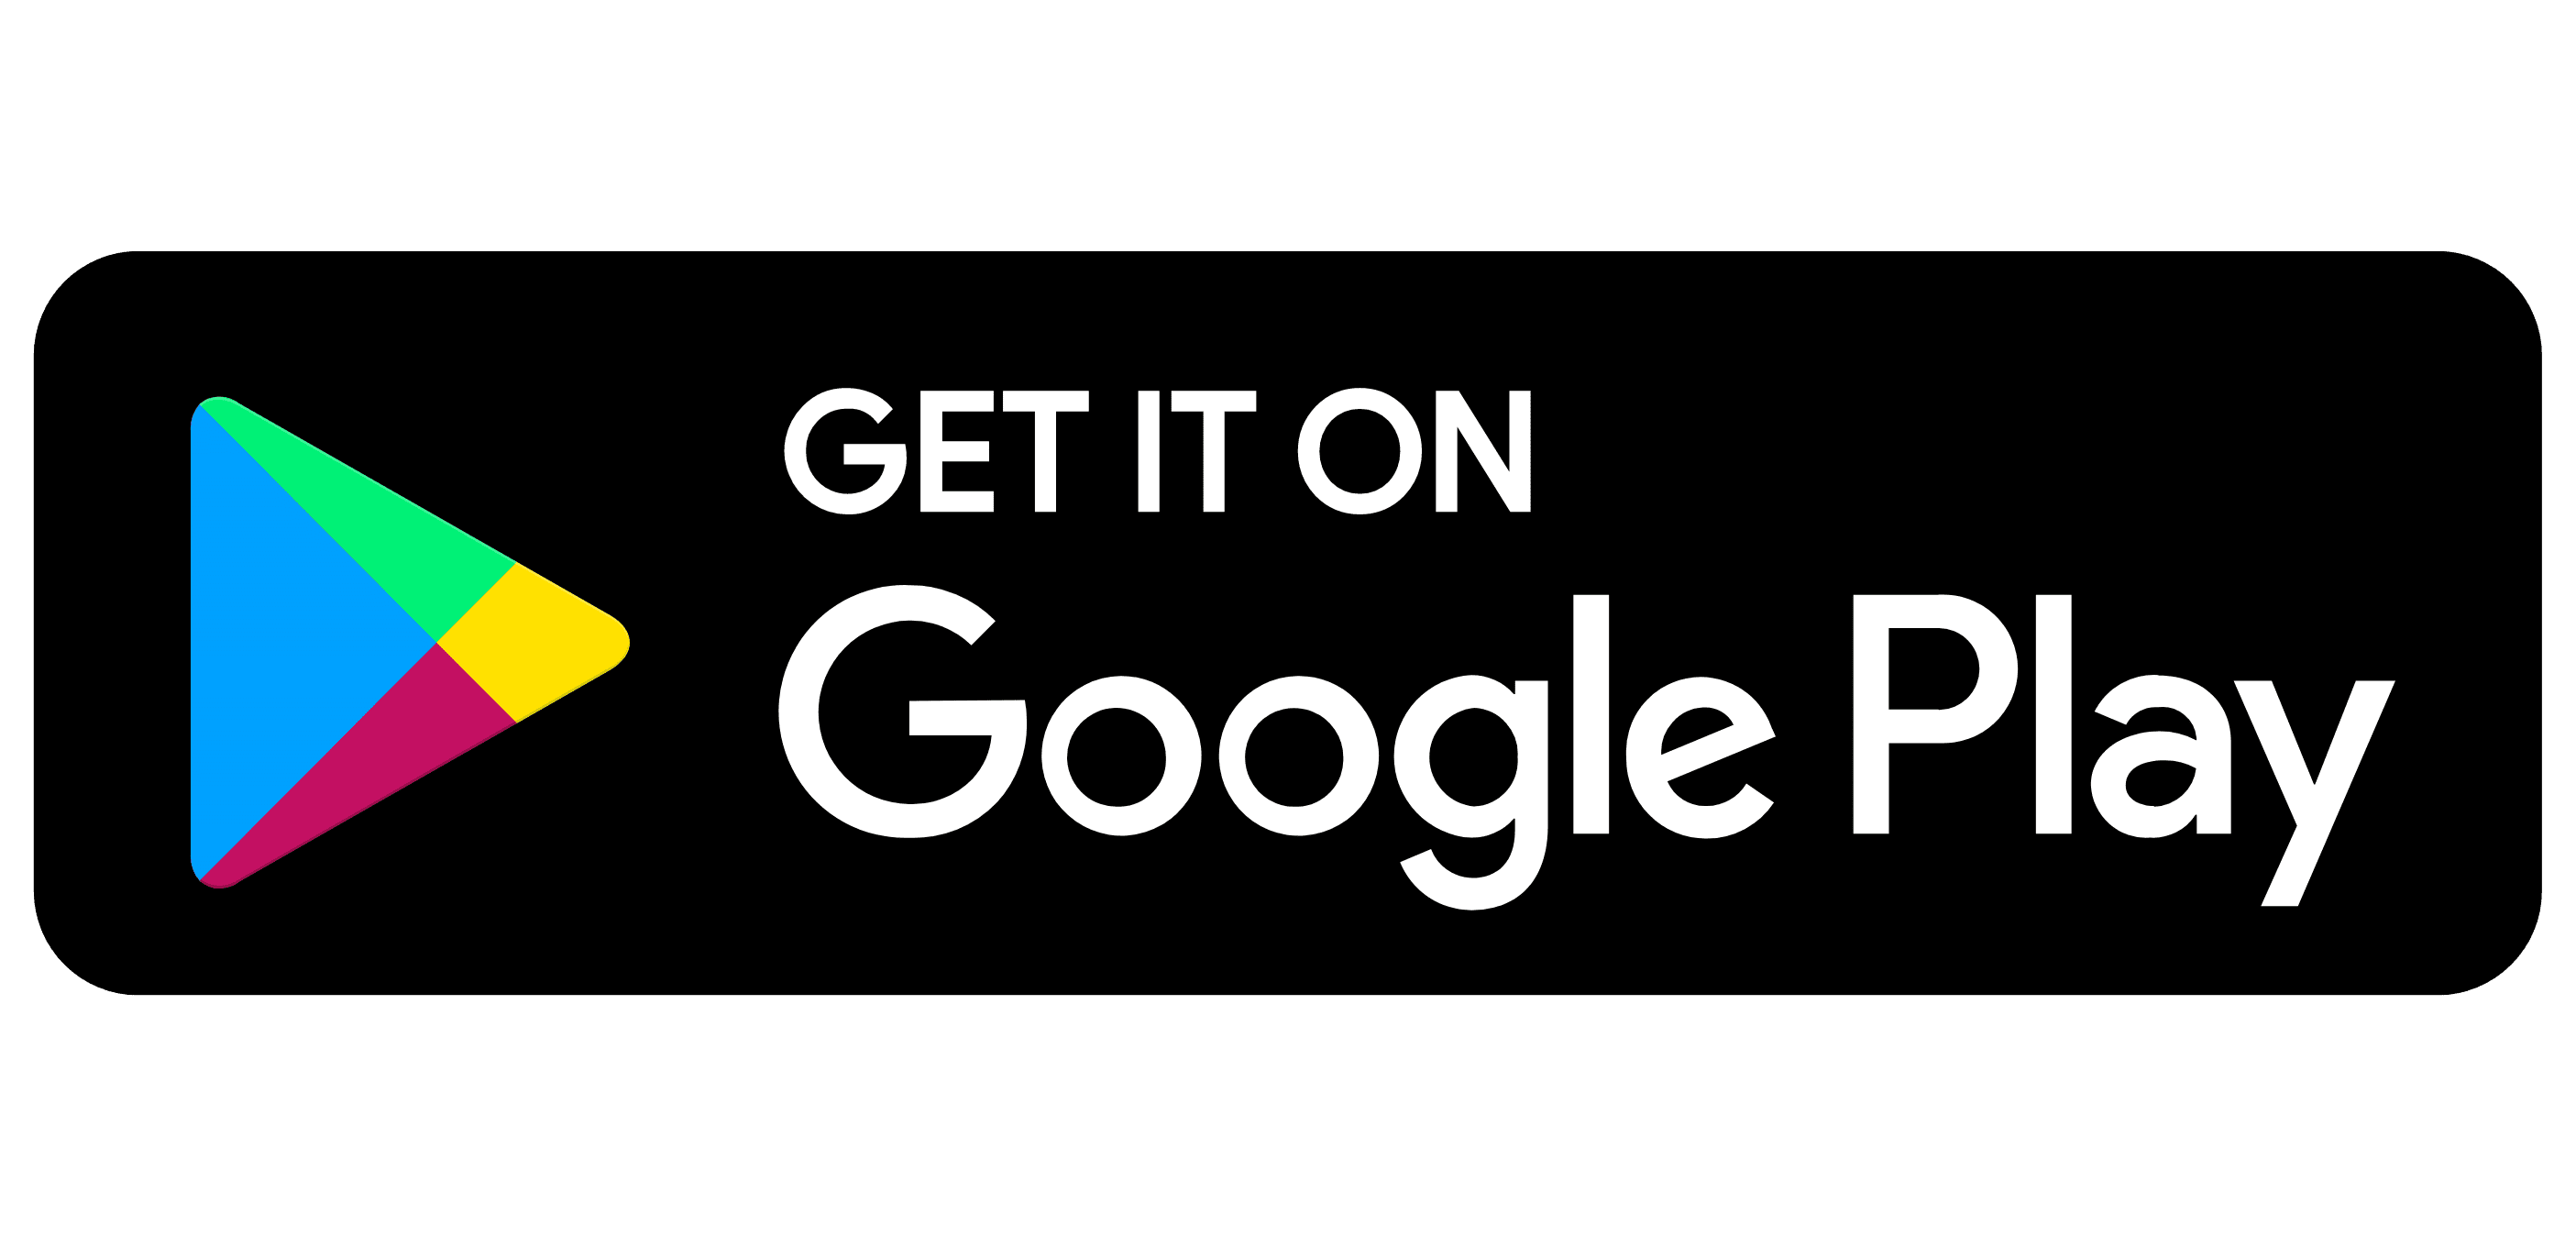 Google play турция. Google Play. Логотип Google Play. Get it on Google Play значок. Иконка Google Play PNG.